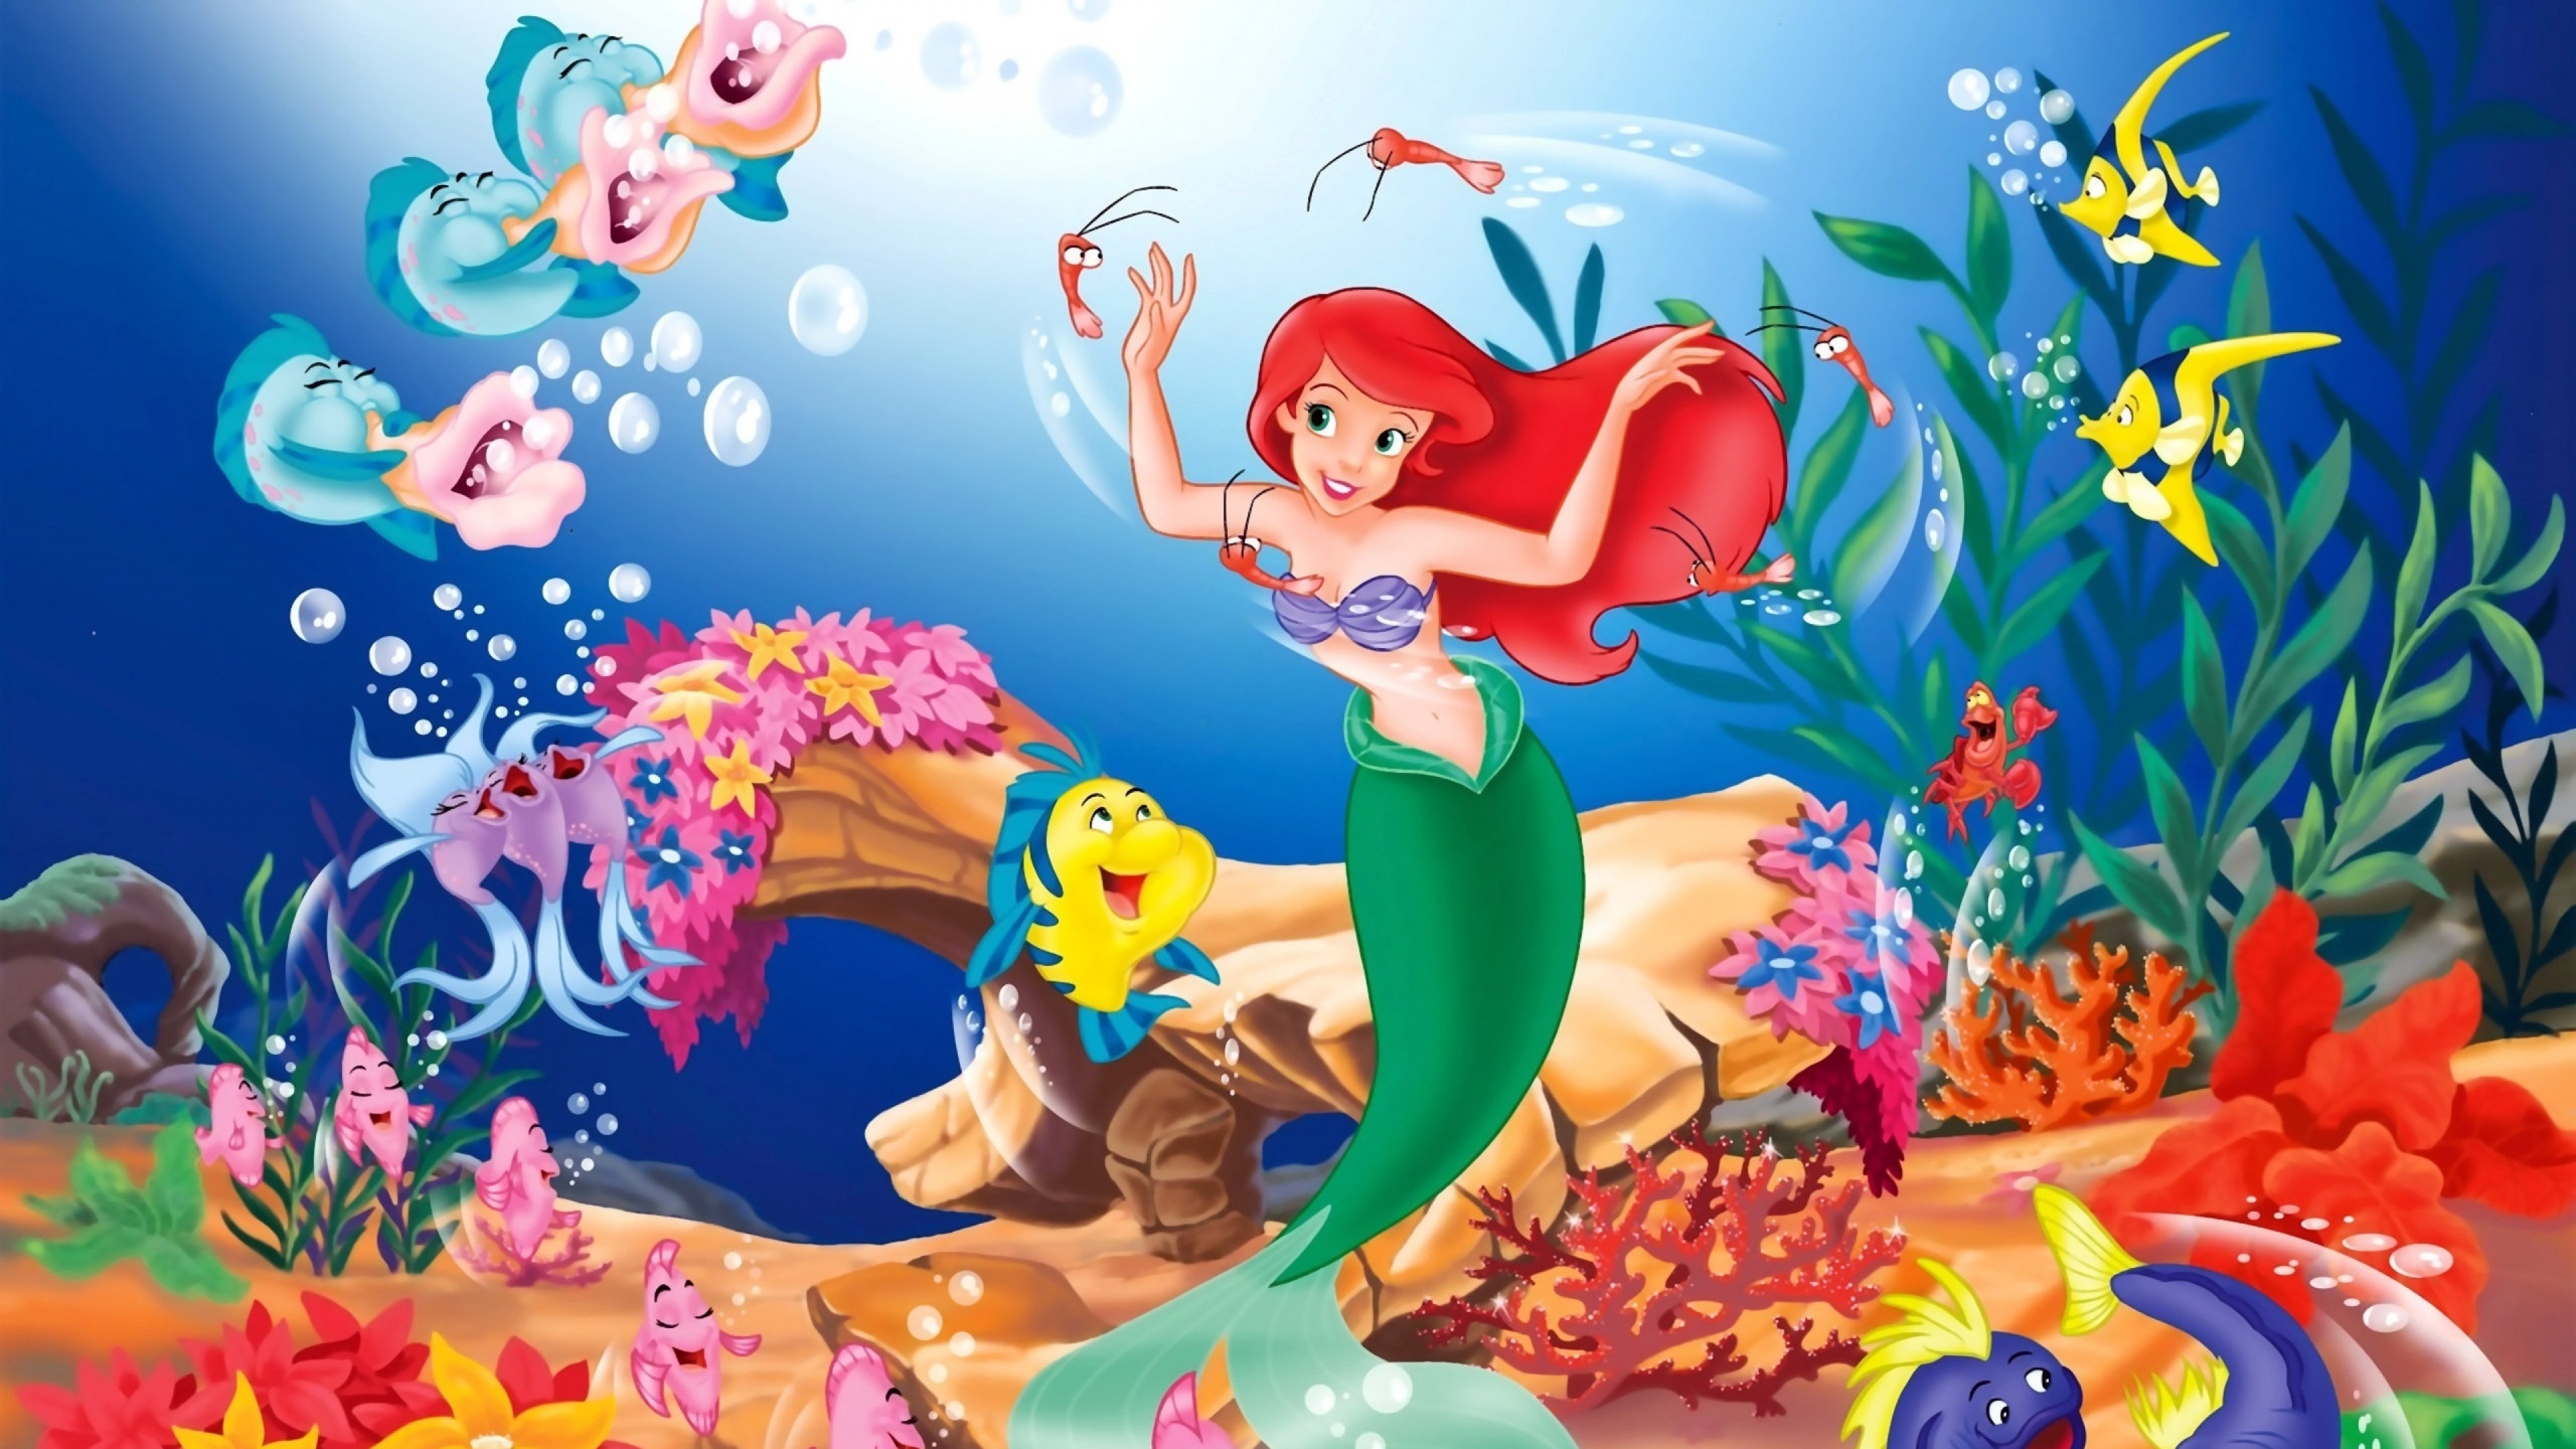 fantasy Art, Digital Art, The Little Mermaid, Disney Wallpaper